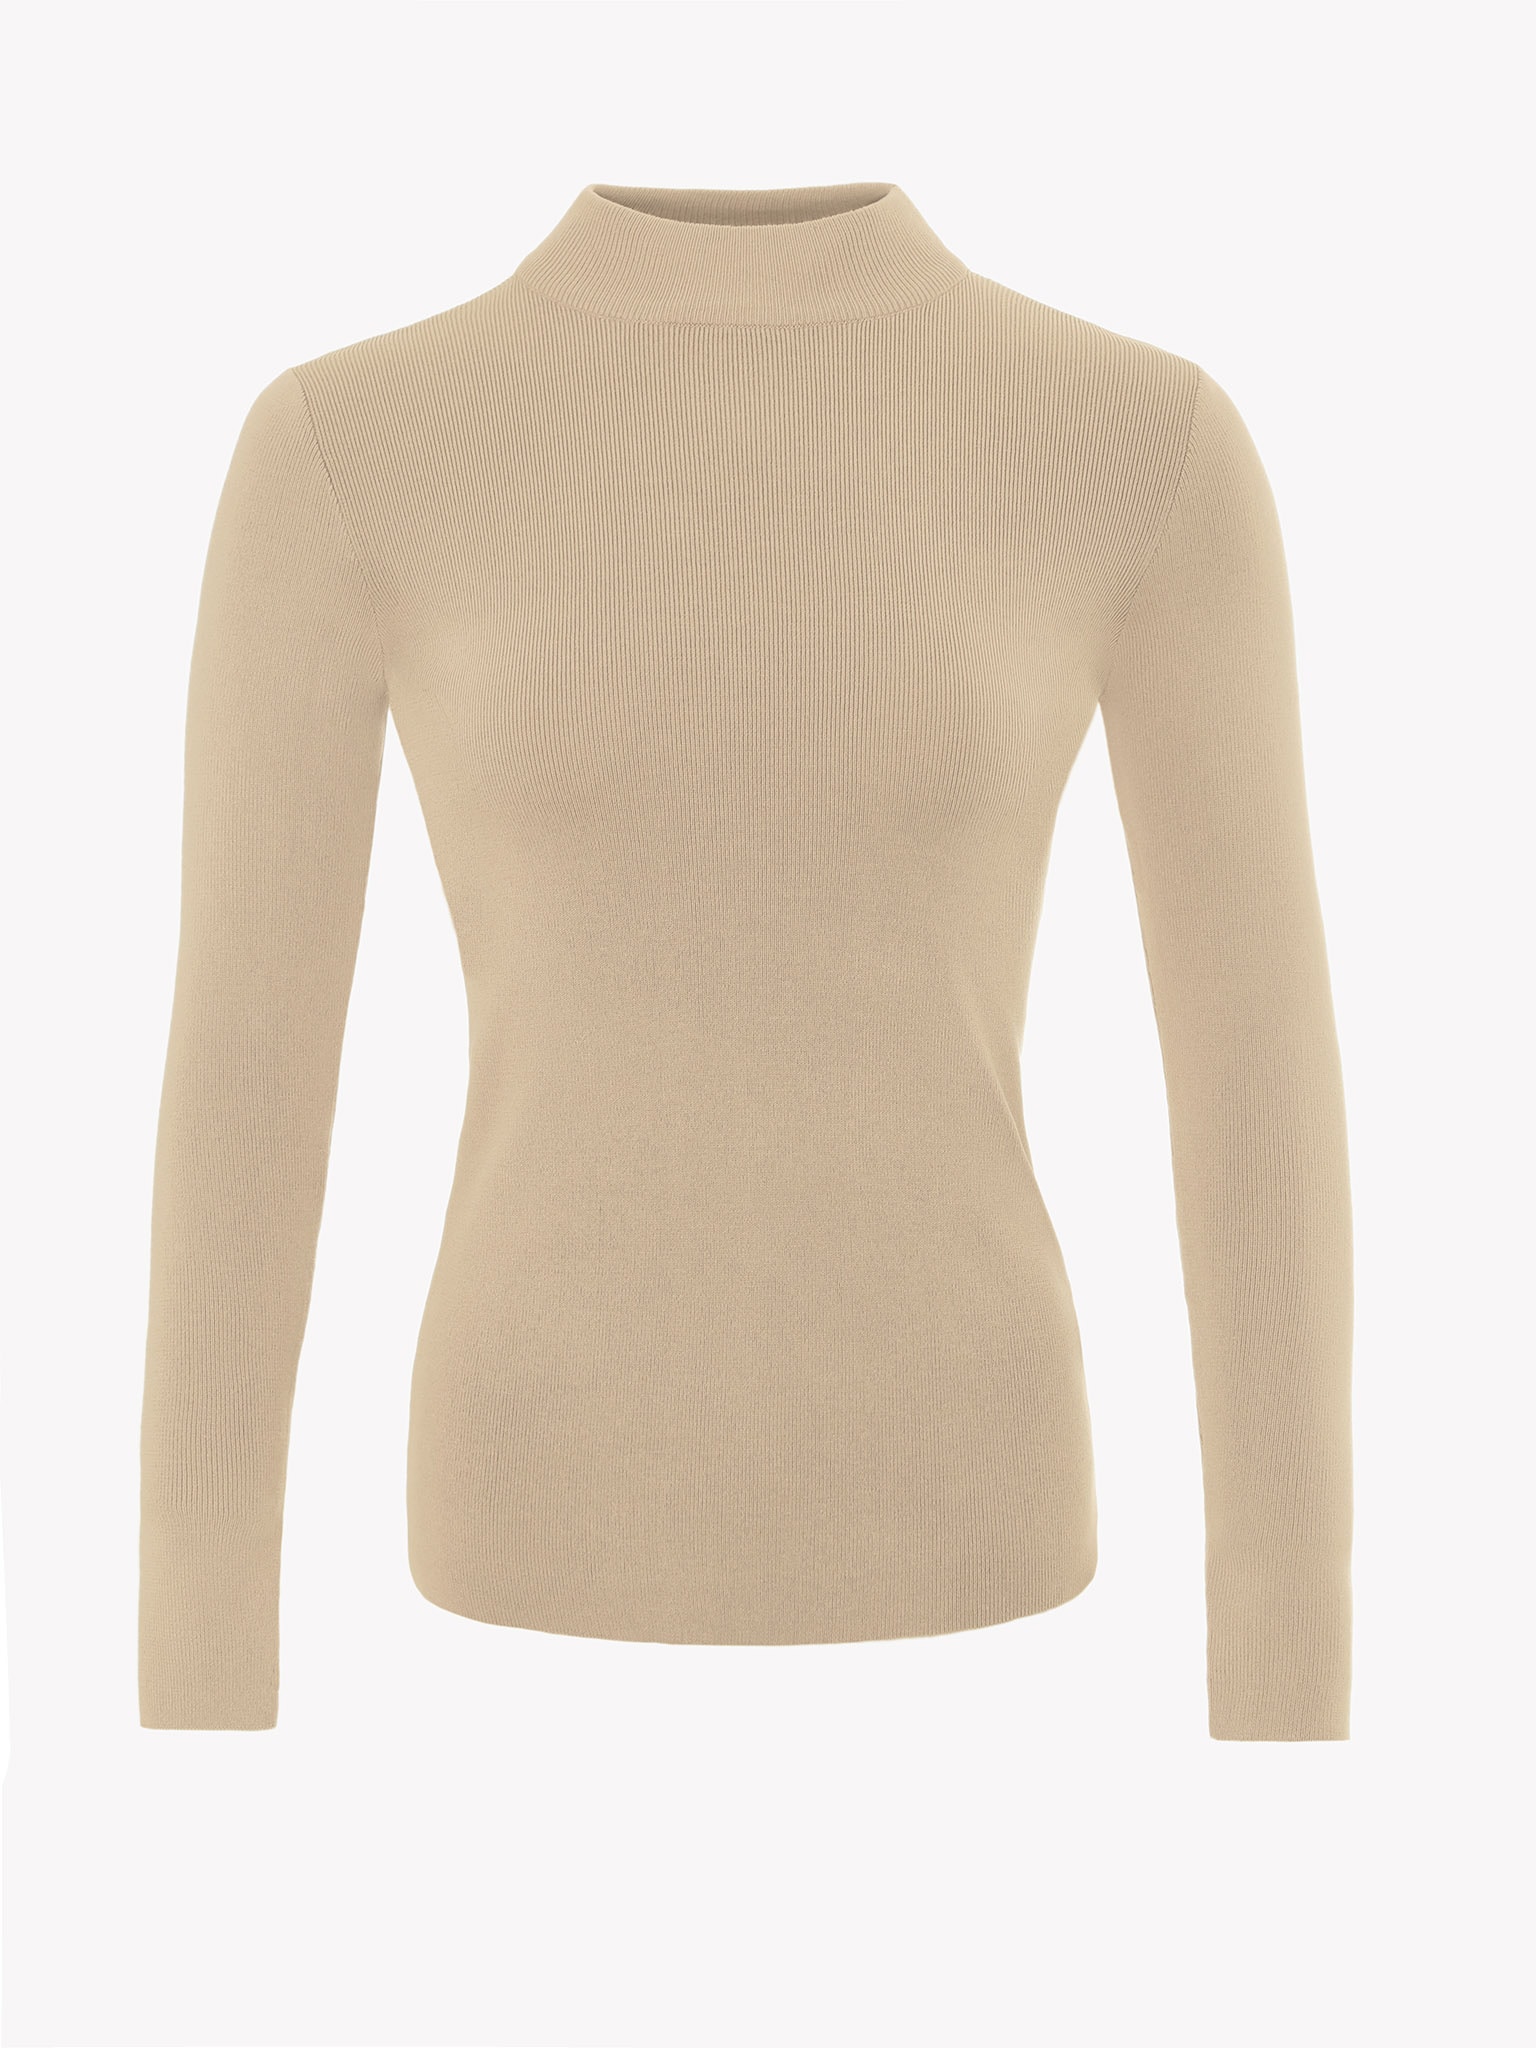 LICHI - Online fashion store :: Fine-knit turtleneck sweater